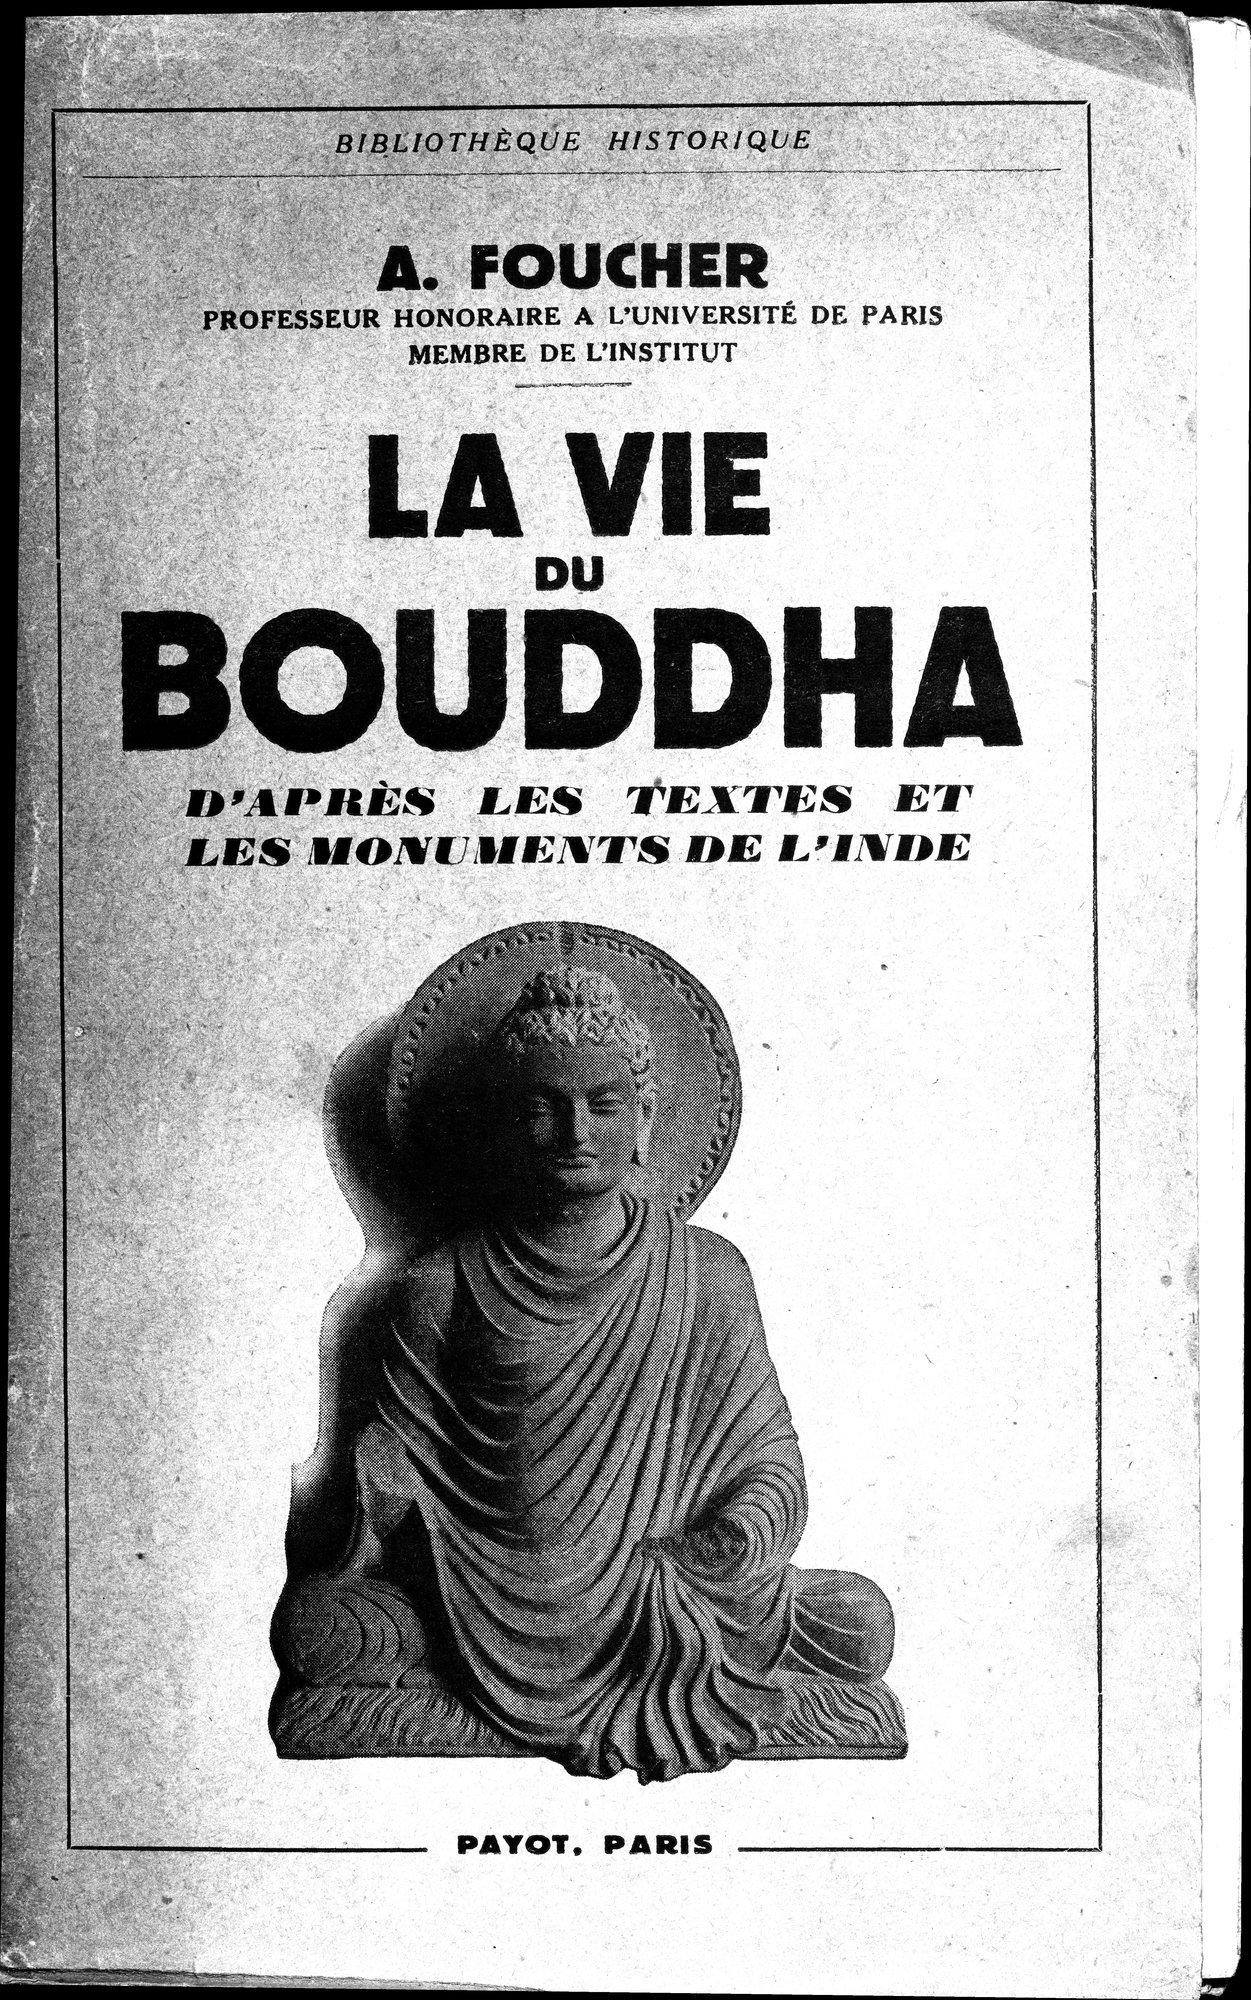 La Vie du Bouddha : vol.1 / Page 1 (Grayscale High Resolution Image)